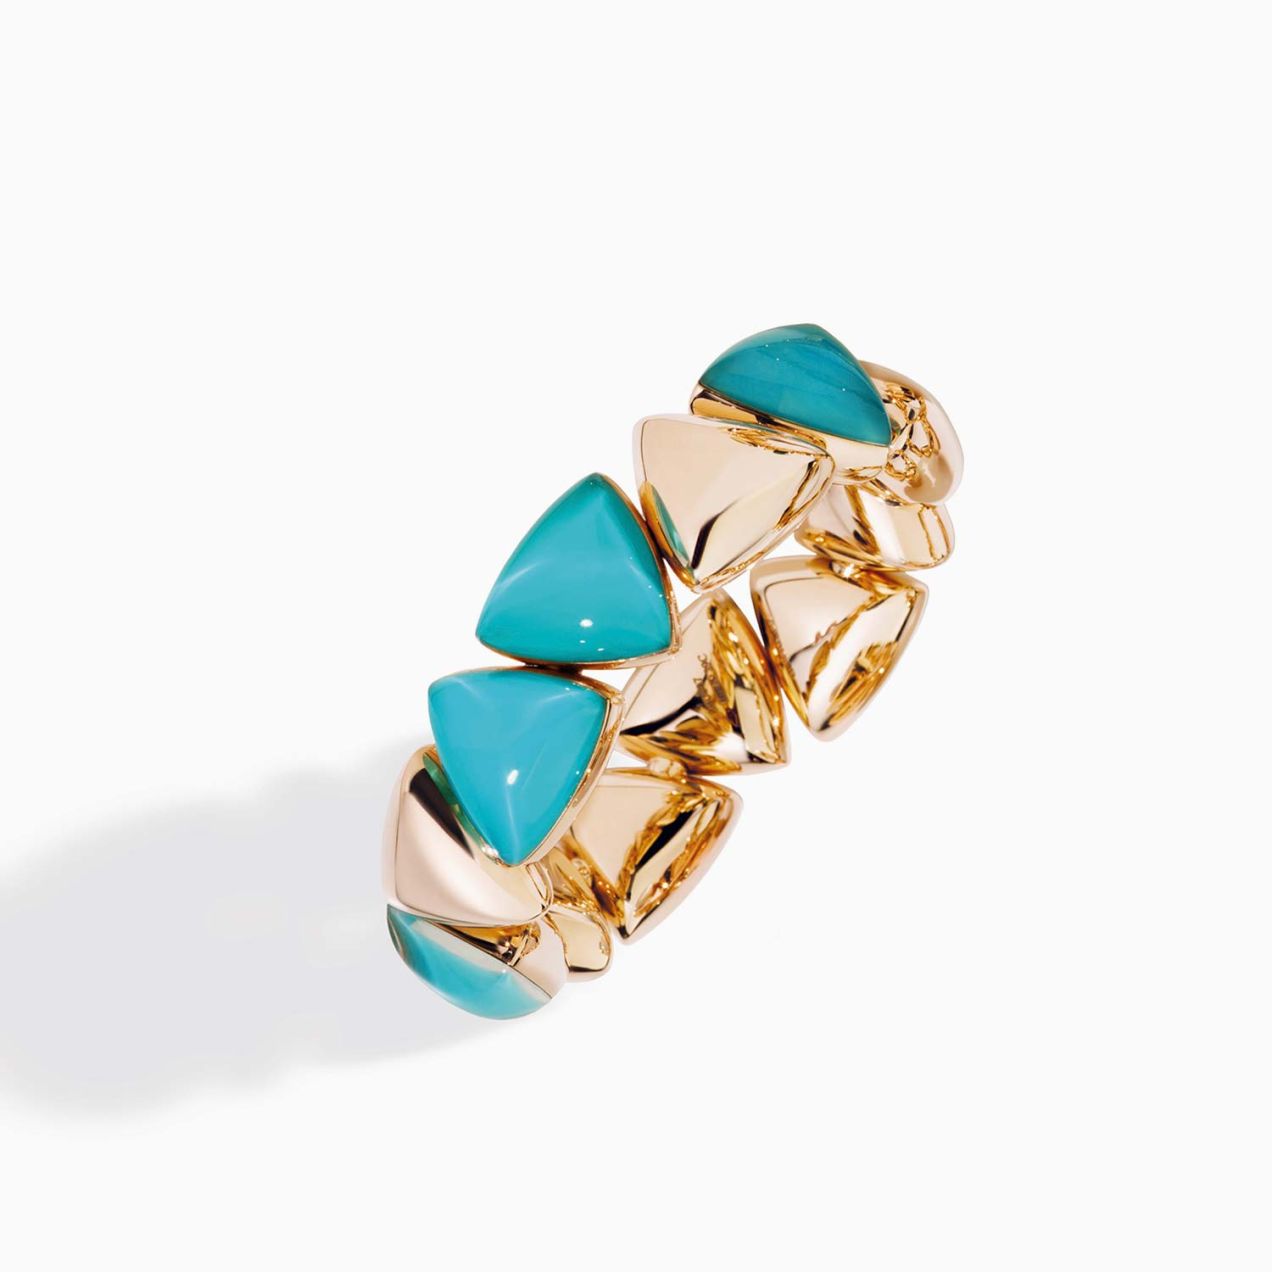 Vhernier freccia rose gold bracelet with quartz crystal and turquoise